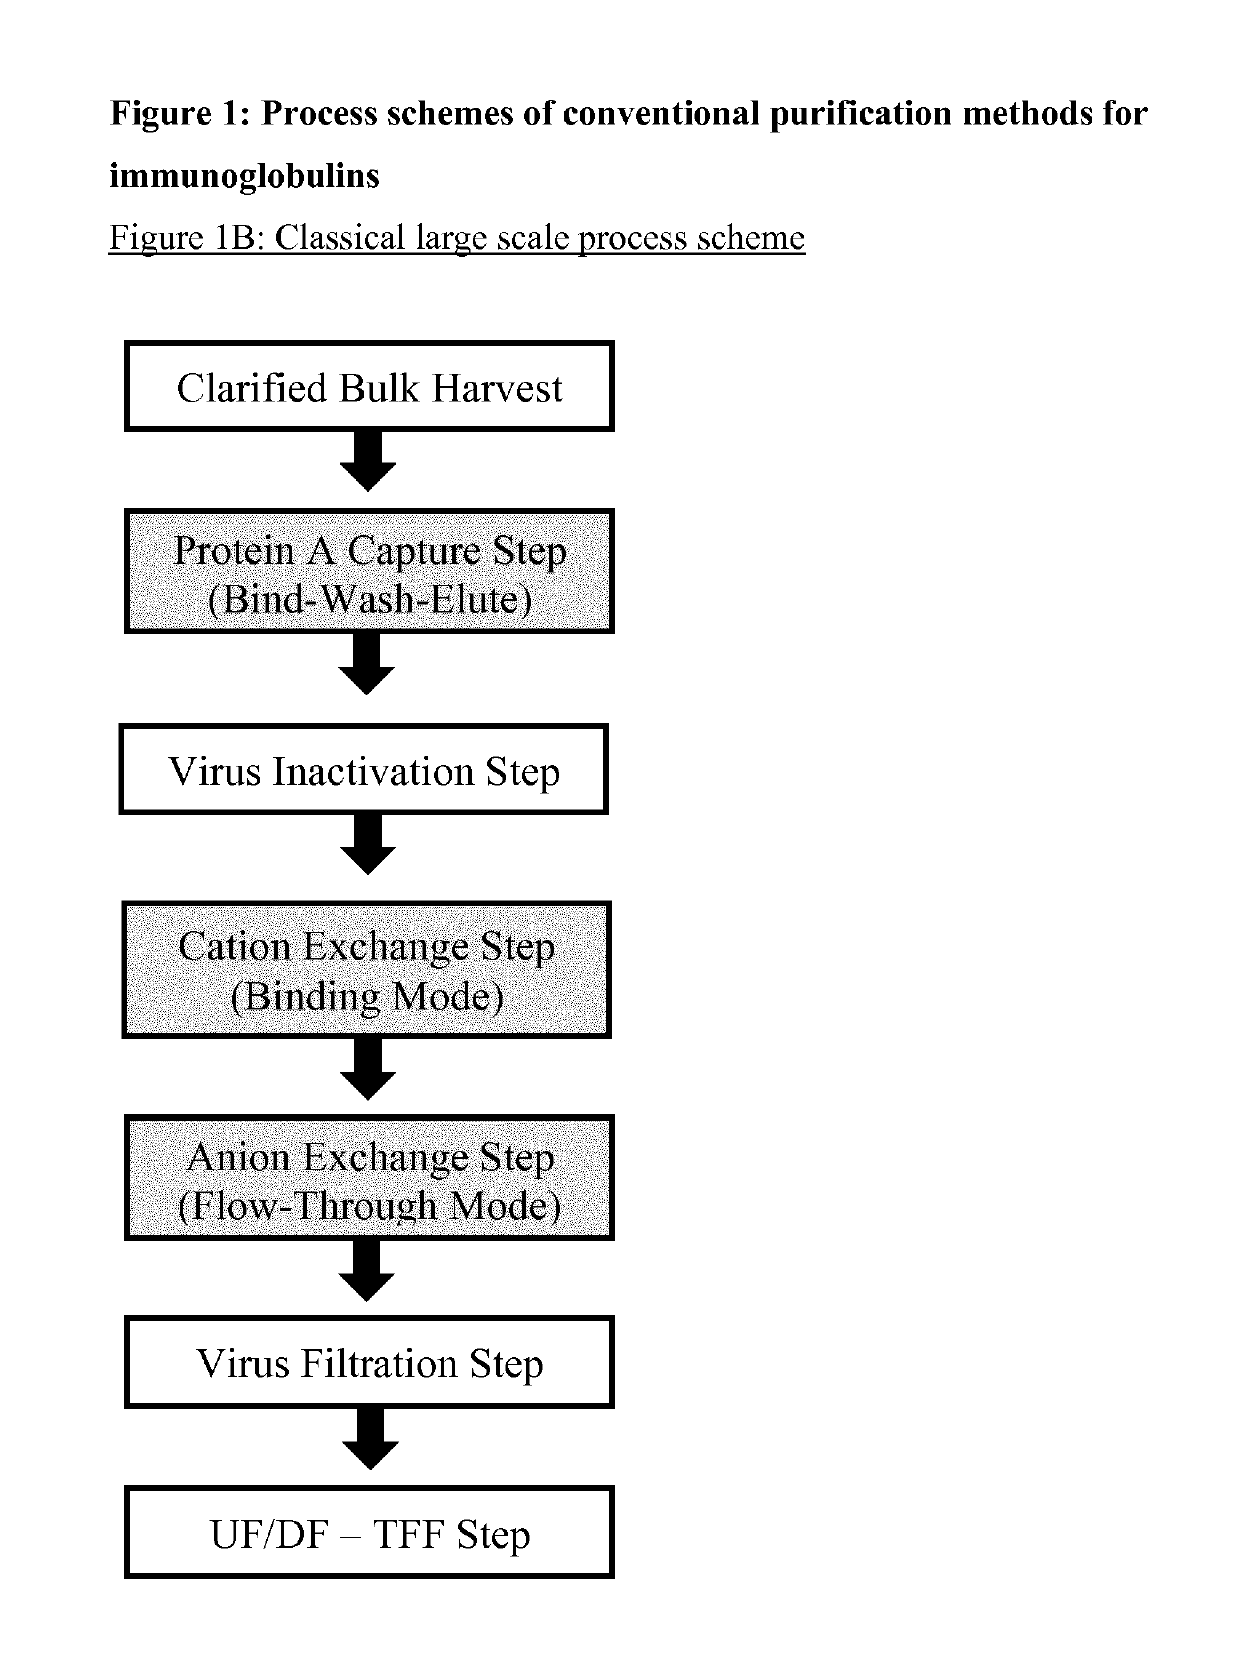 Immunoglobulin purification using pre-cleaning steps